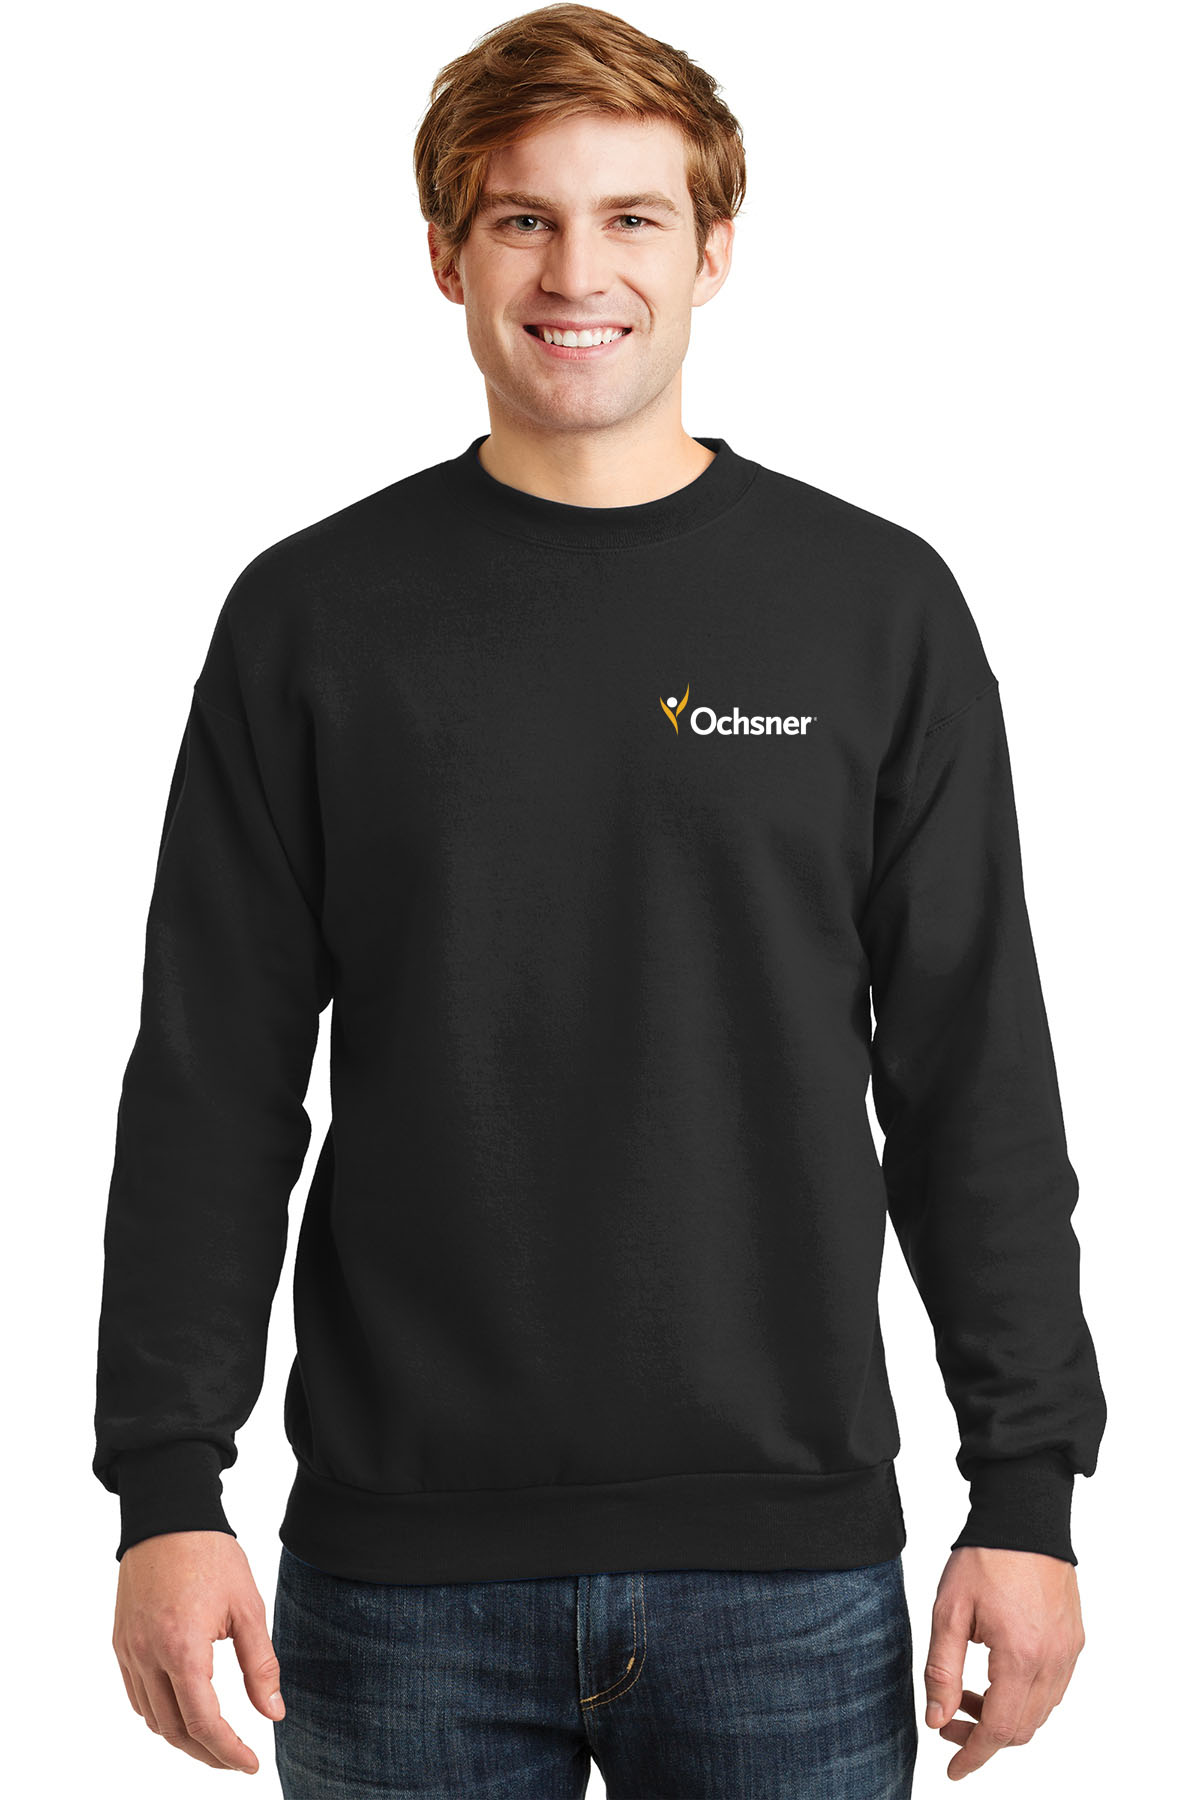 Hanes Unisex Ecosmart Sweatshirt, Black, large image number 1